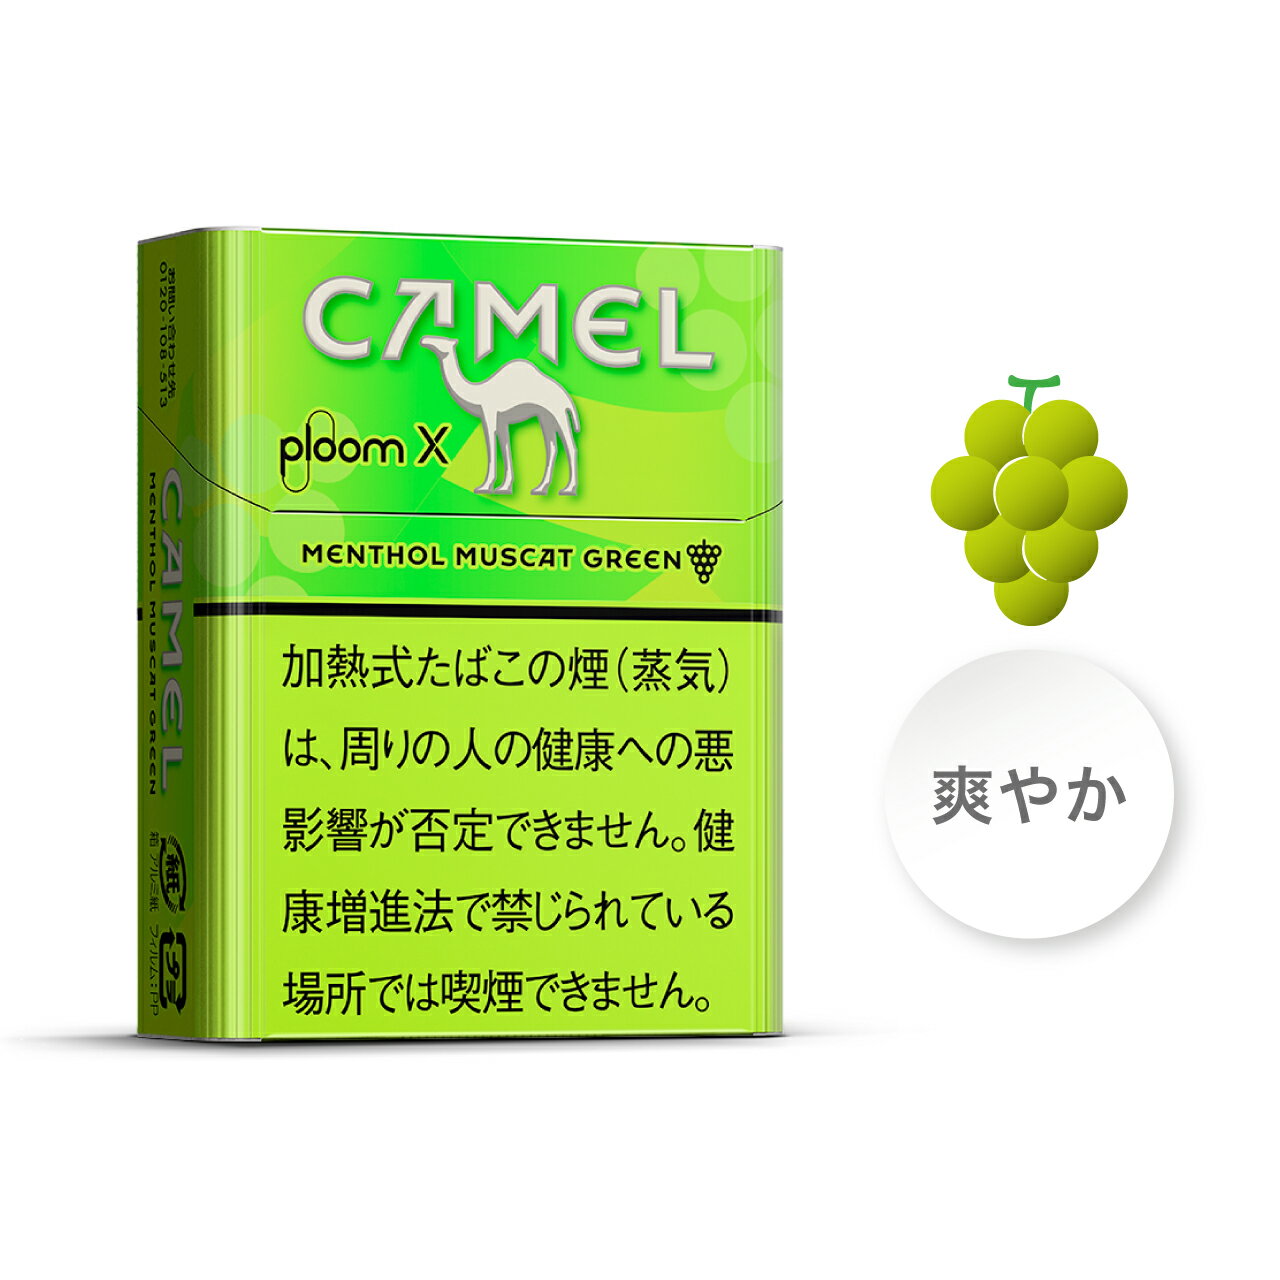 Camel Menthol Muscat Green Ploom X:2{snus 1000yen:2